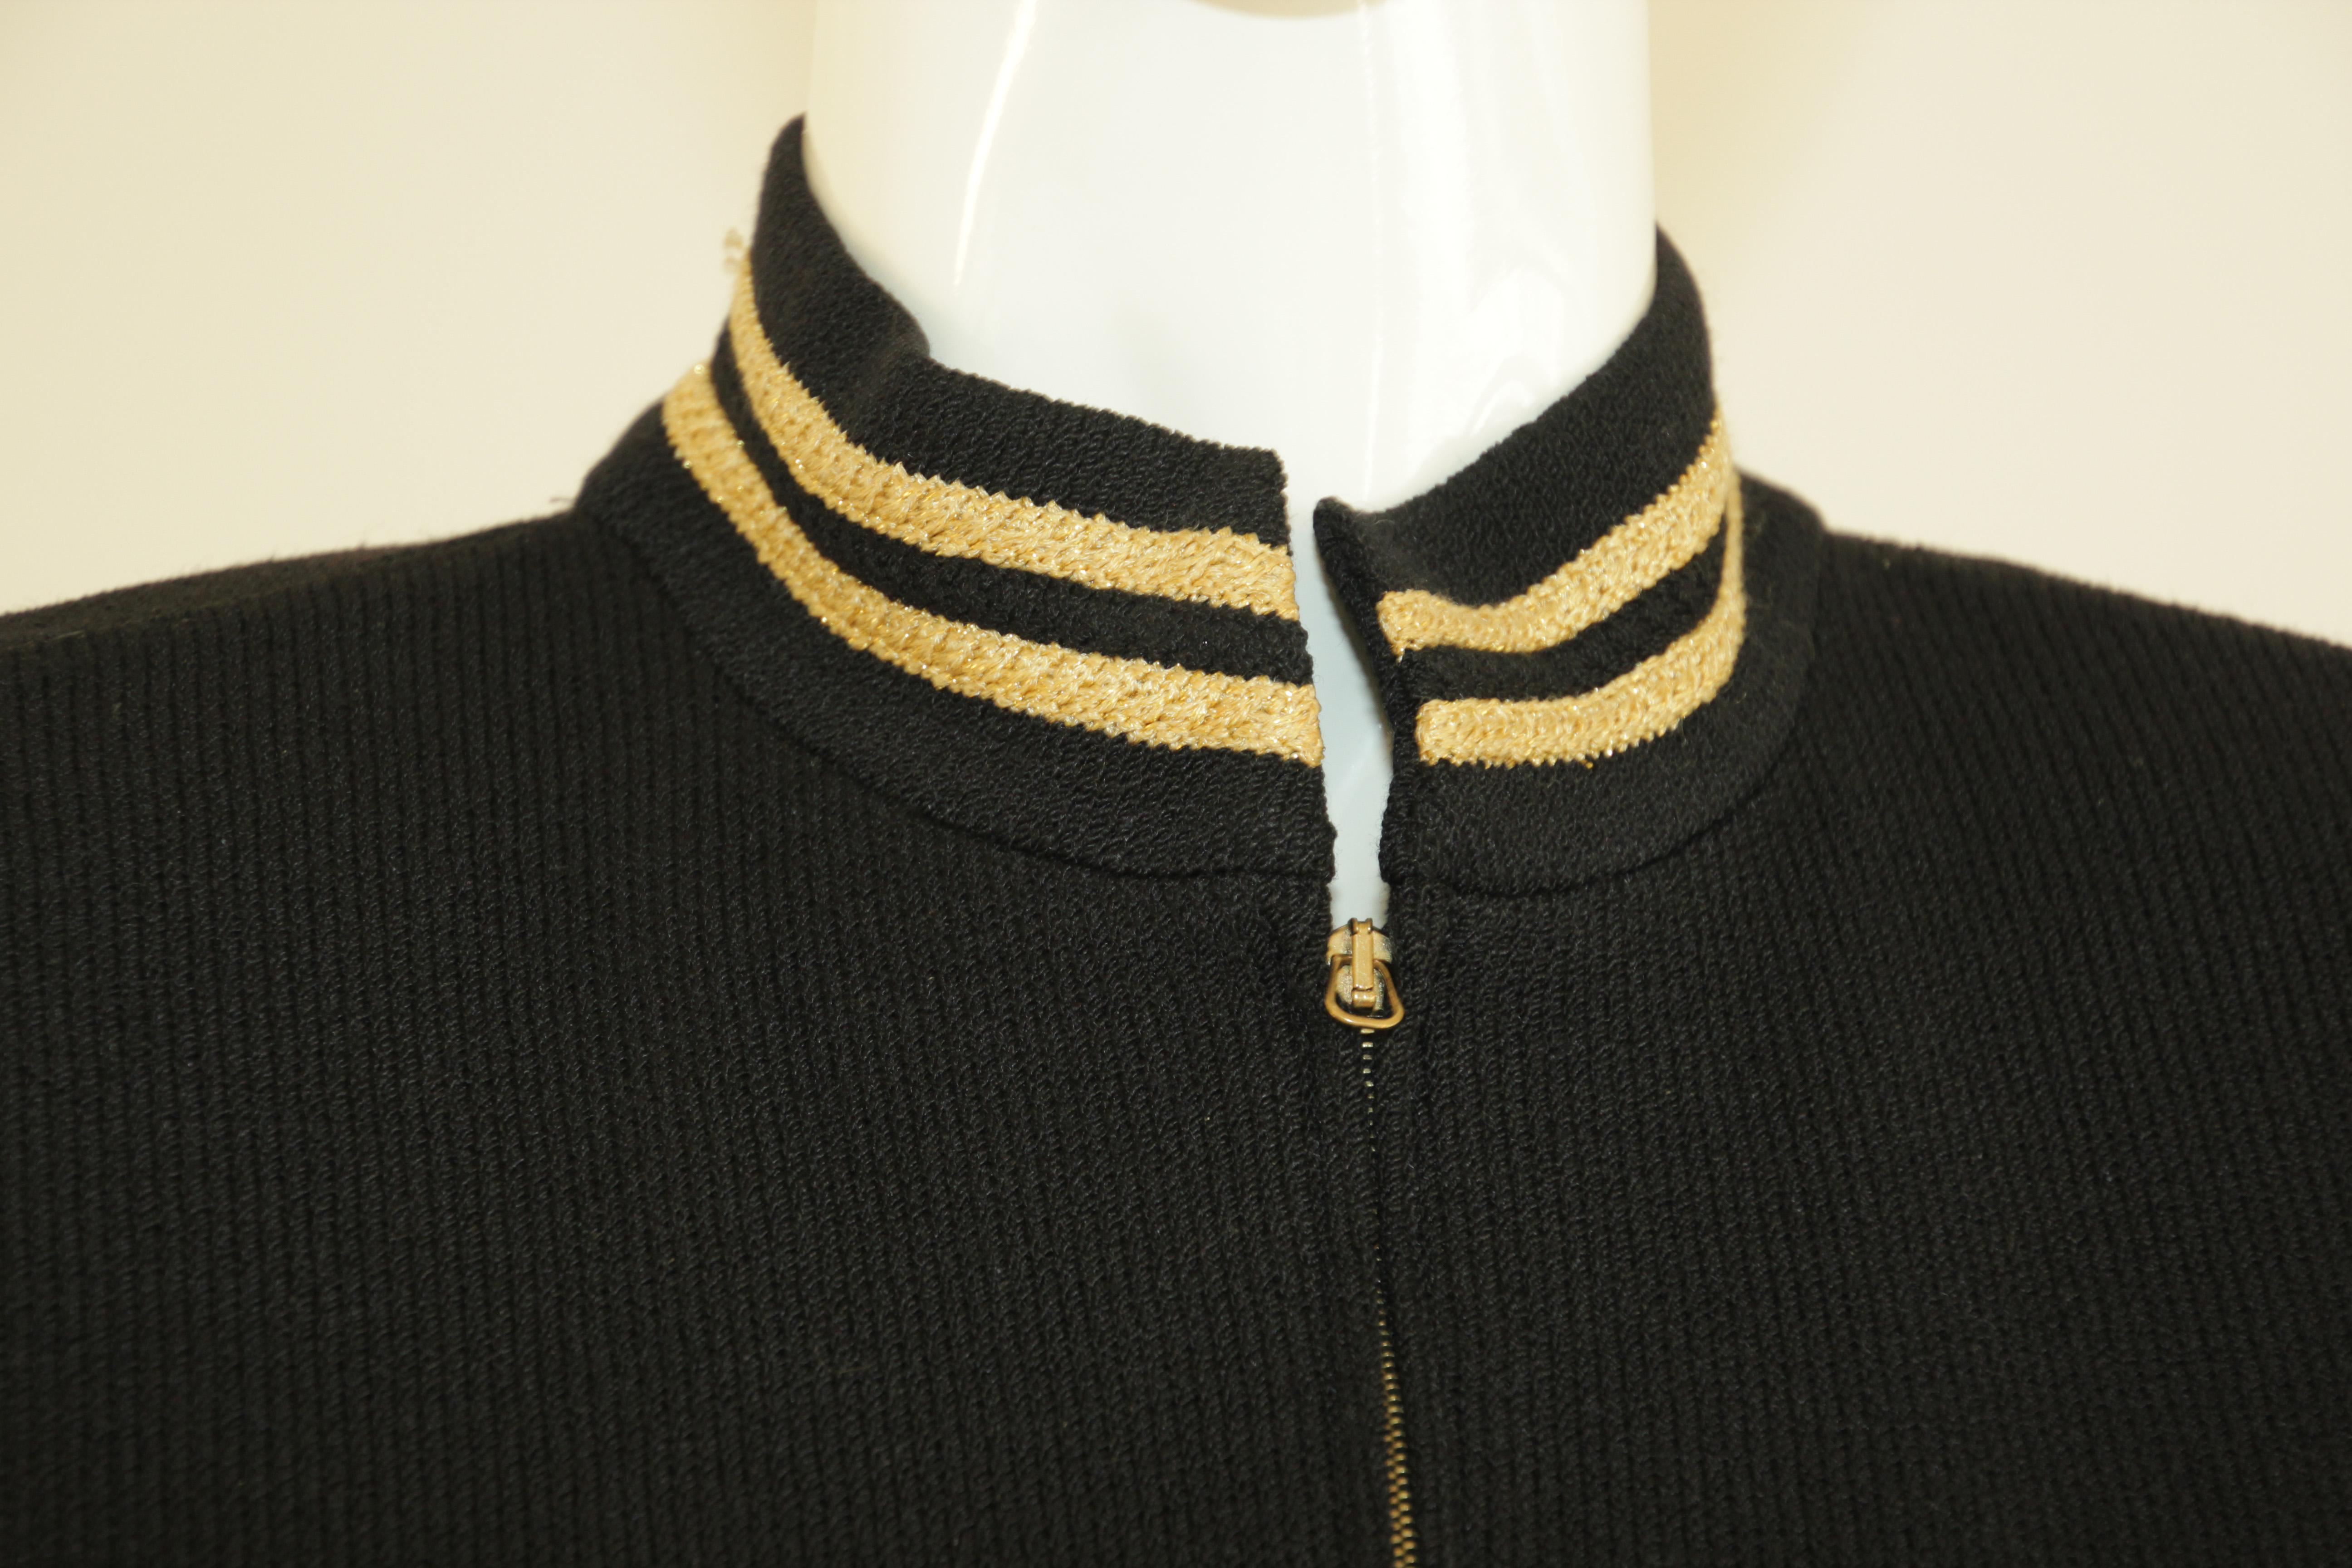 Women's or Men's St. John Military Blazer Knit Jacket 1990's Black and Gold For Sale